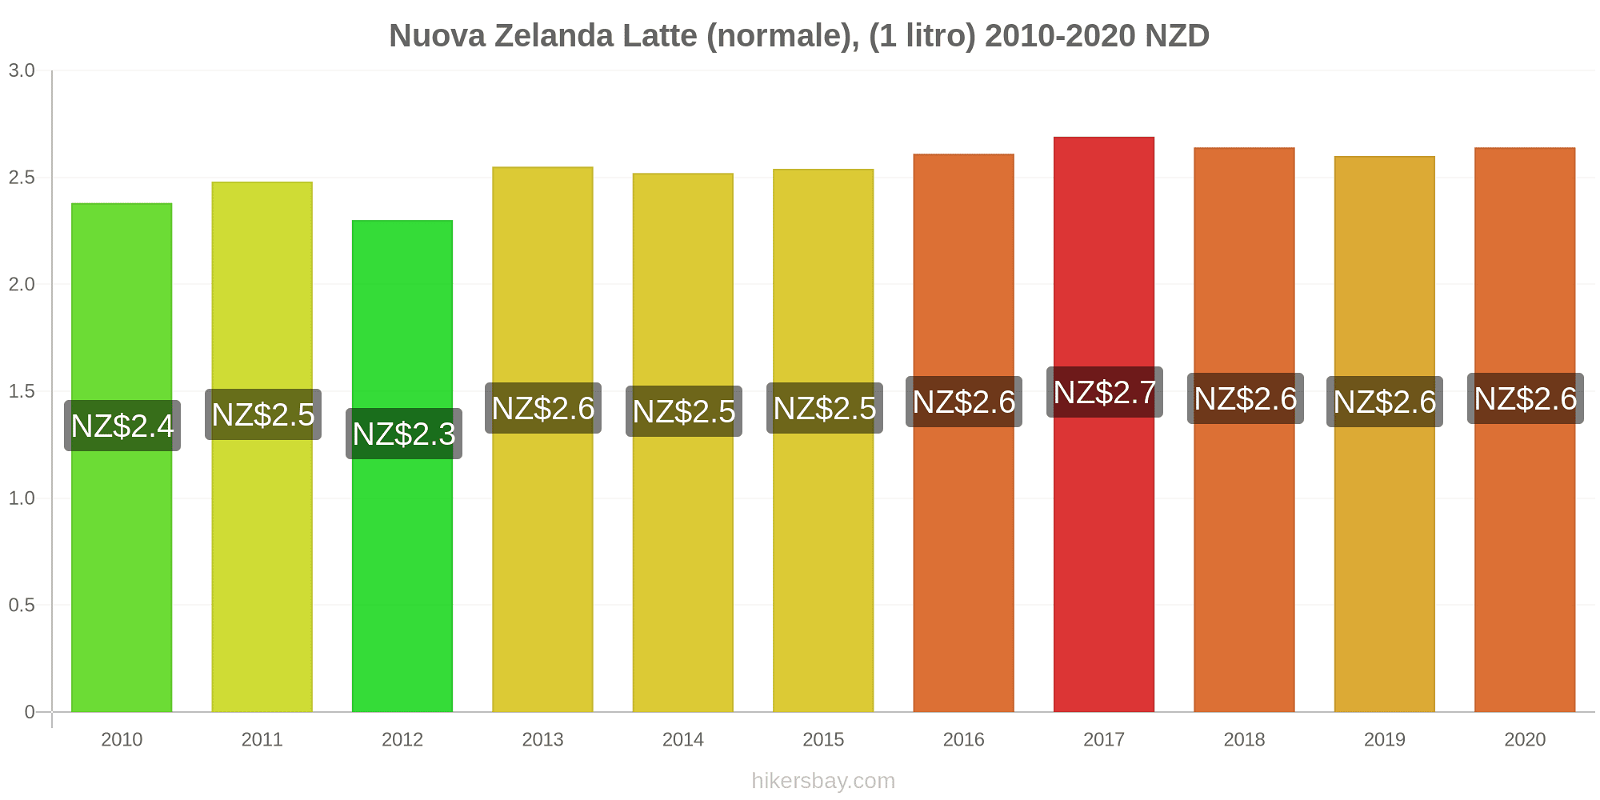 Nuova Zelanda variazioni di prezzo Latte (1 litro) hikersbay.com